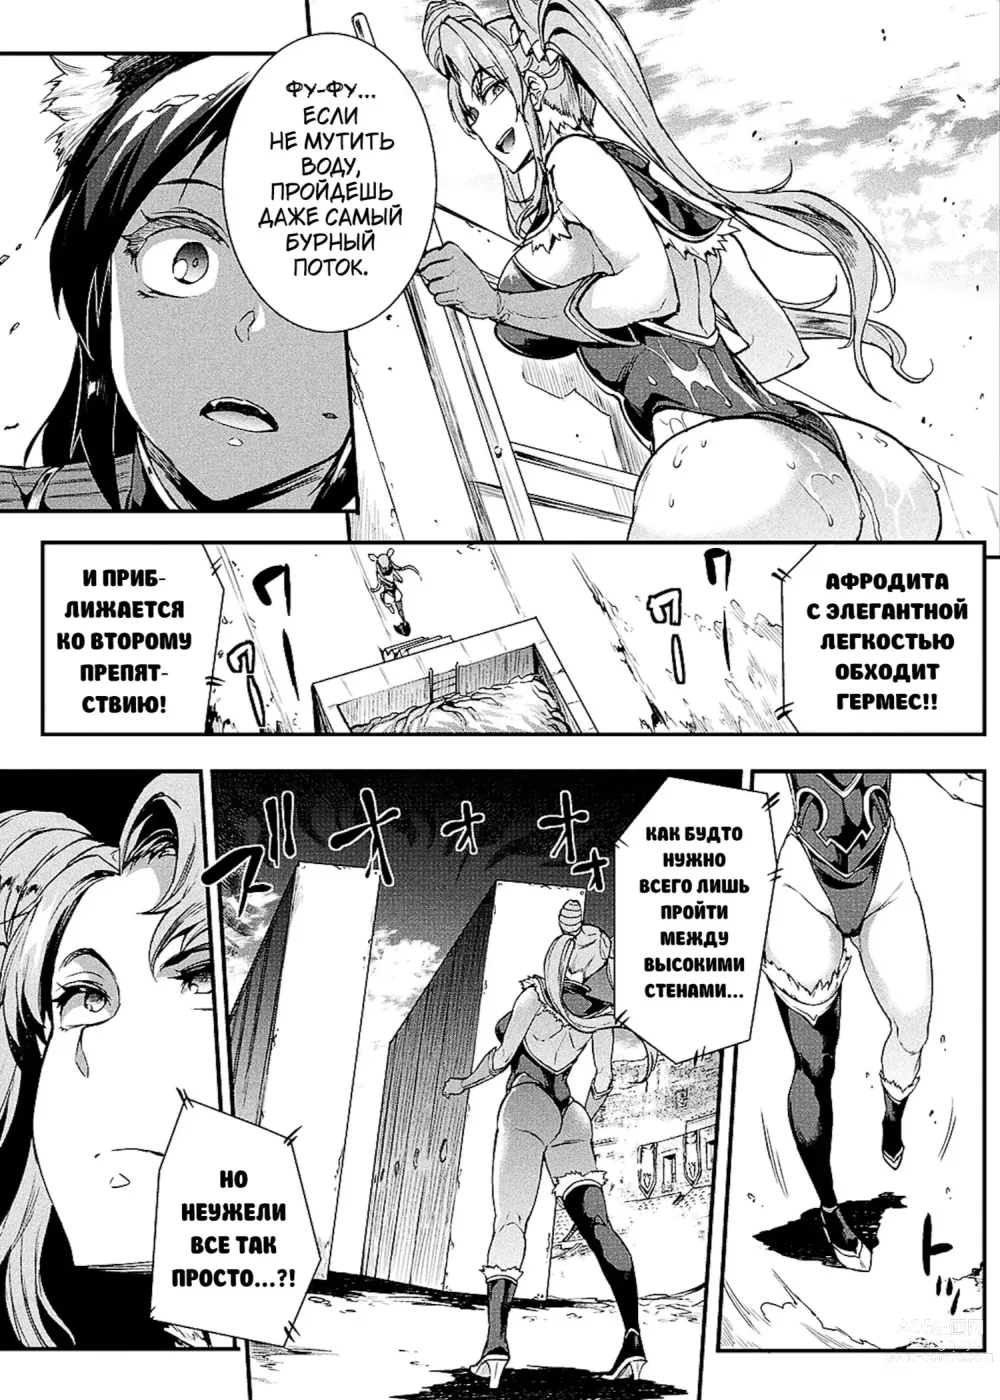 Page 29 of manga Raikou Shinki Igis Magia II -PANDRA saga 3rd ignition-